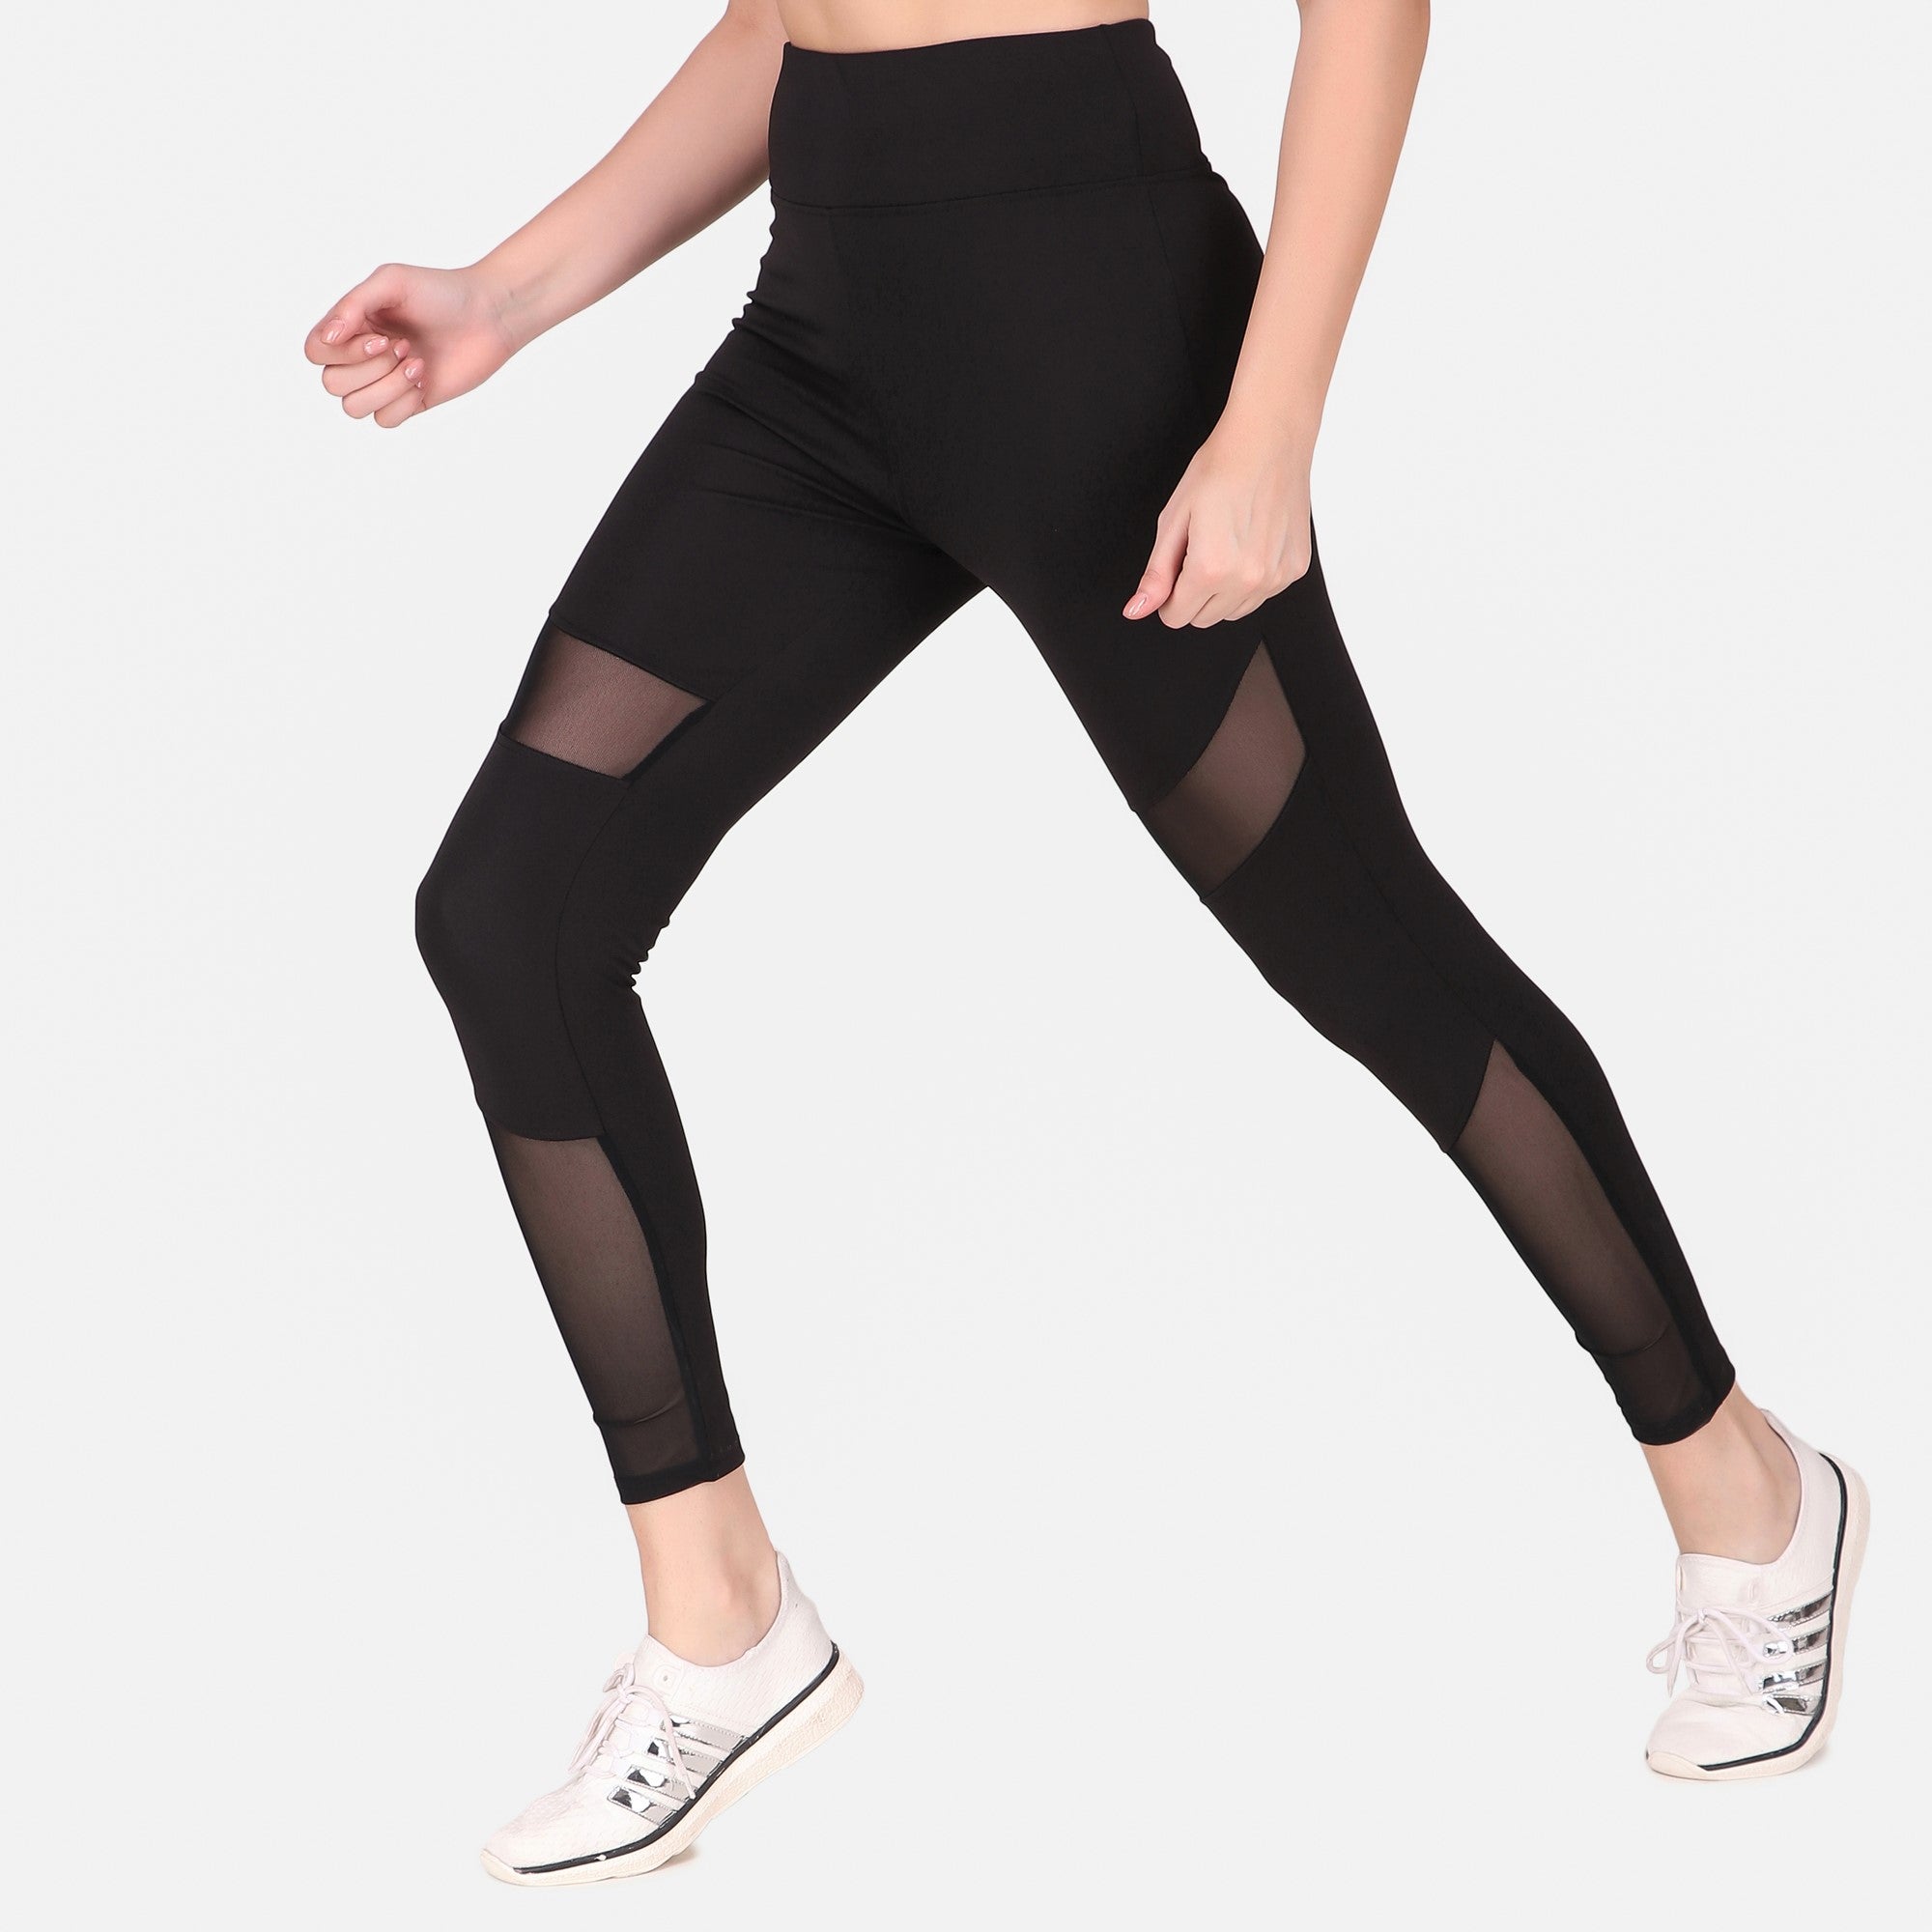 Share 55+ leggings with mesh design latest